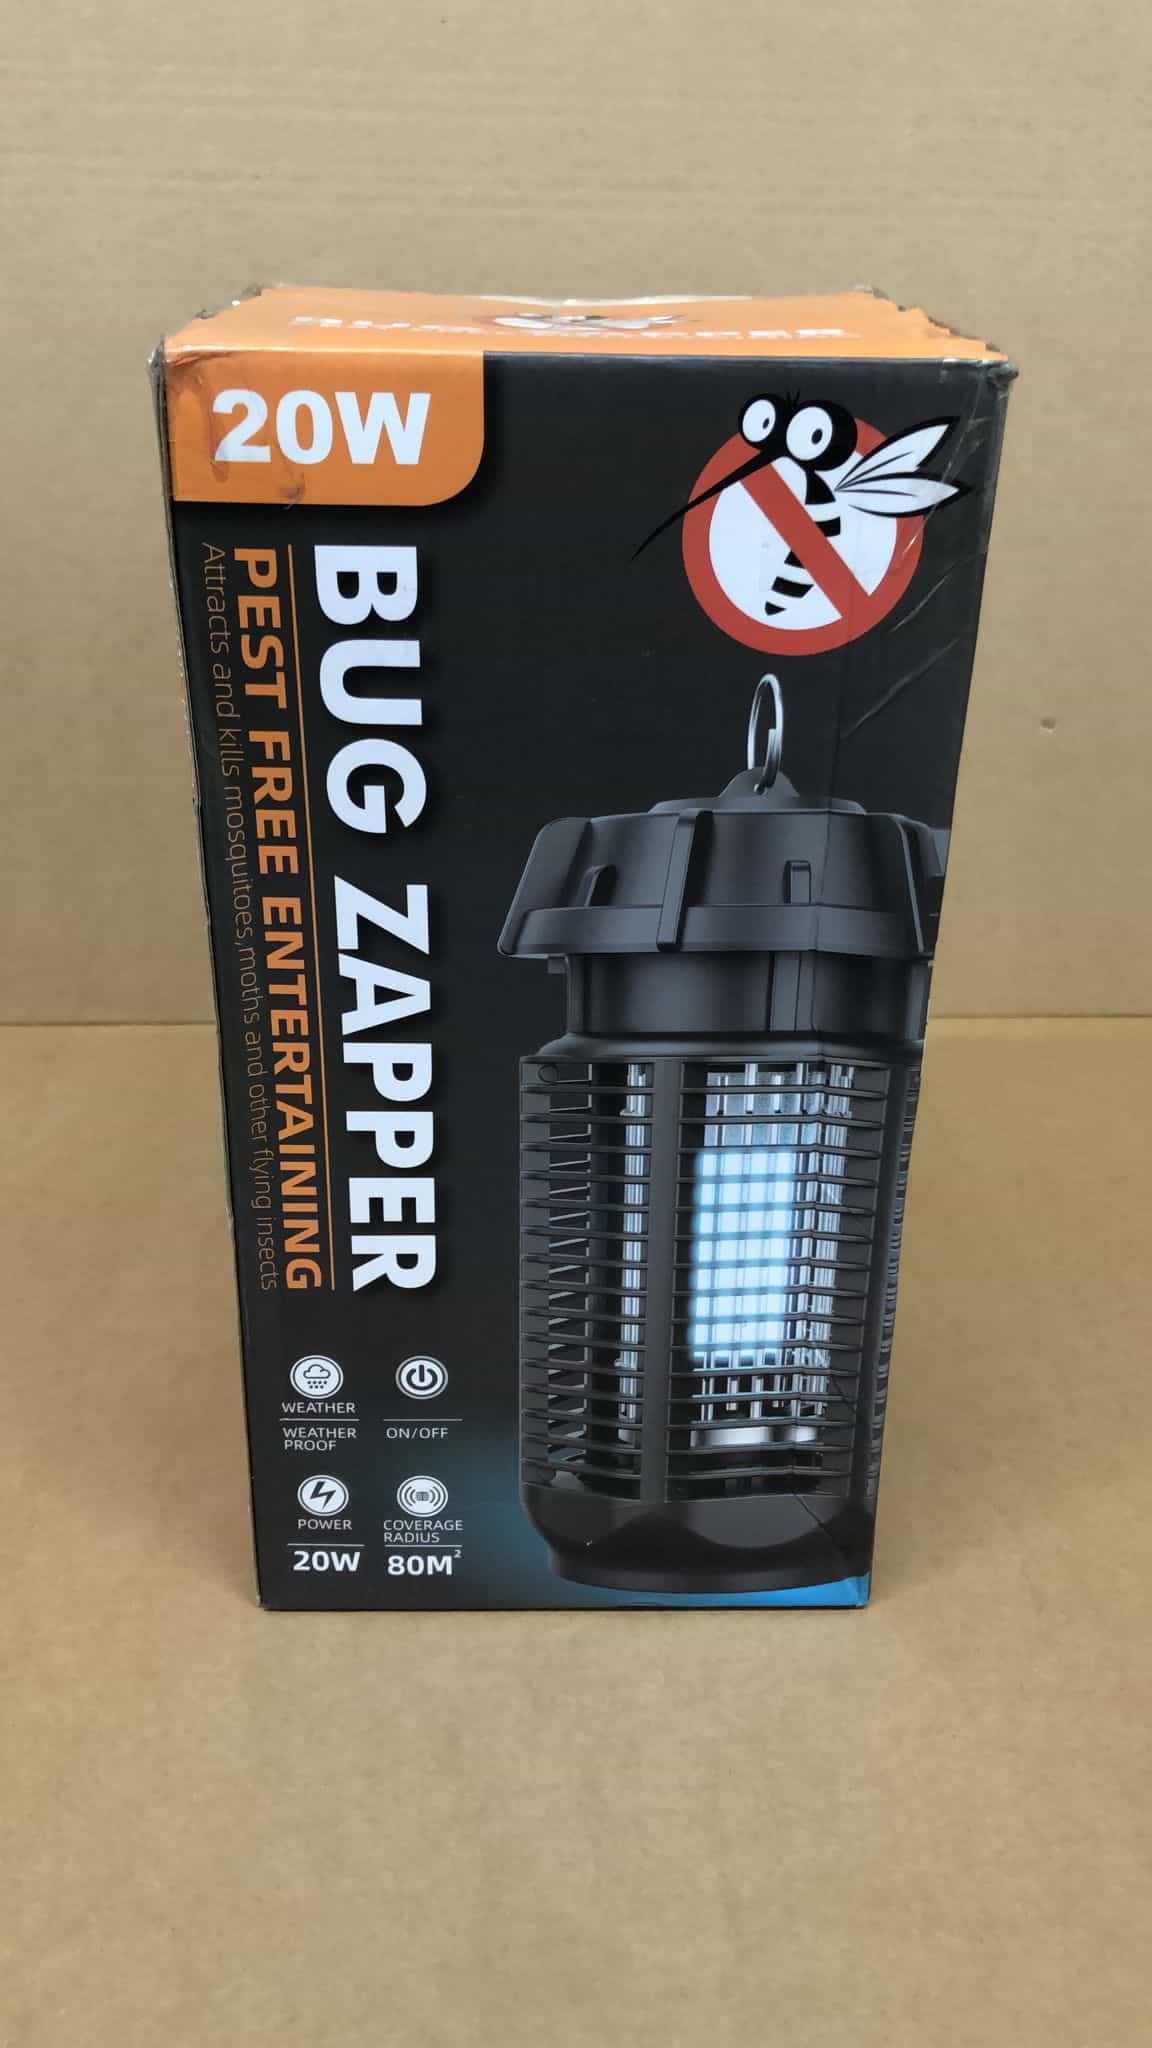 Mosquito Killer, Electric Mosquito Killer Lamp 1212